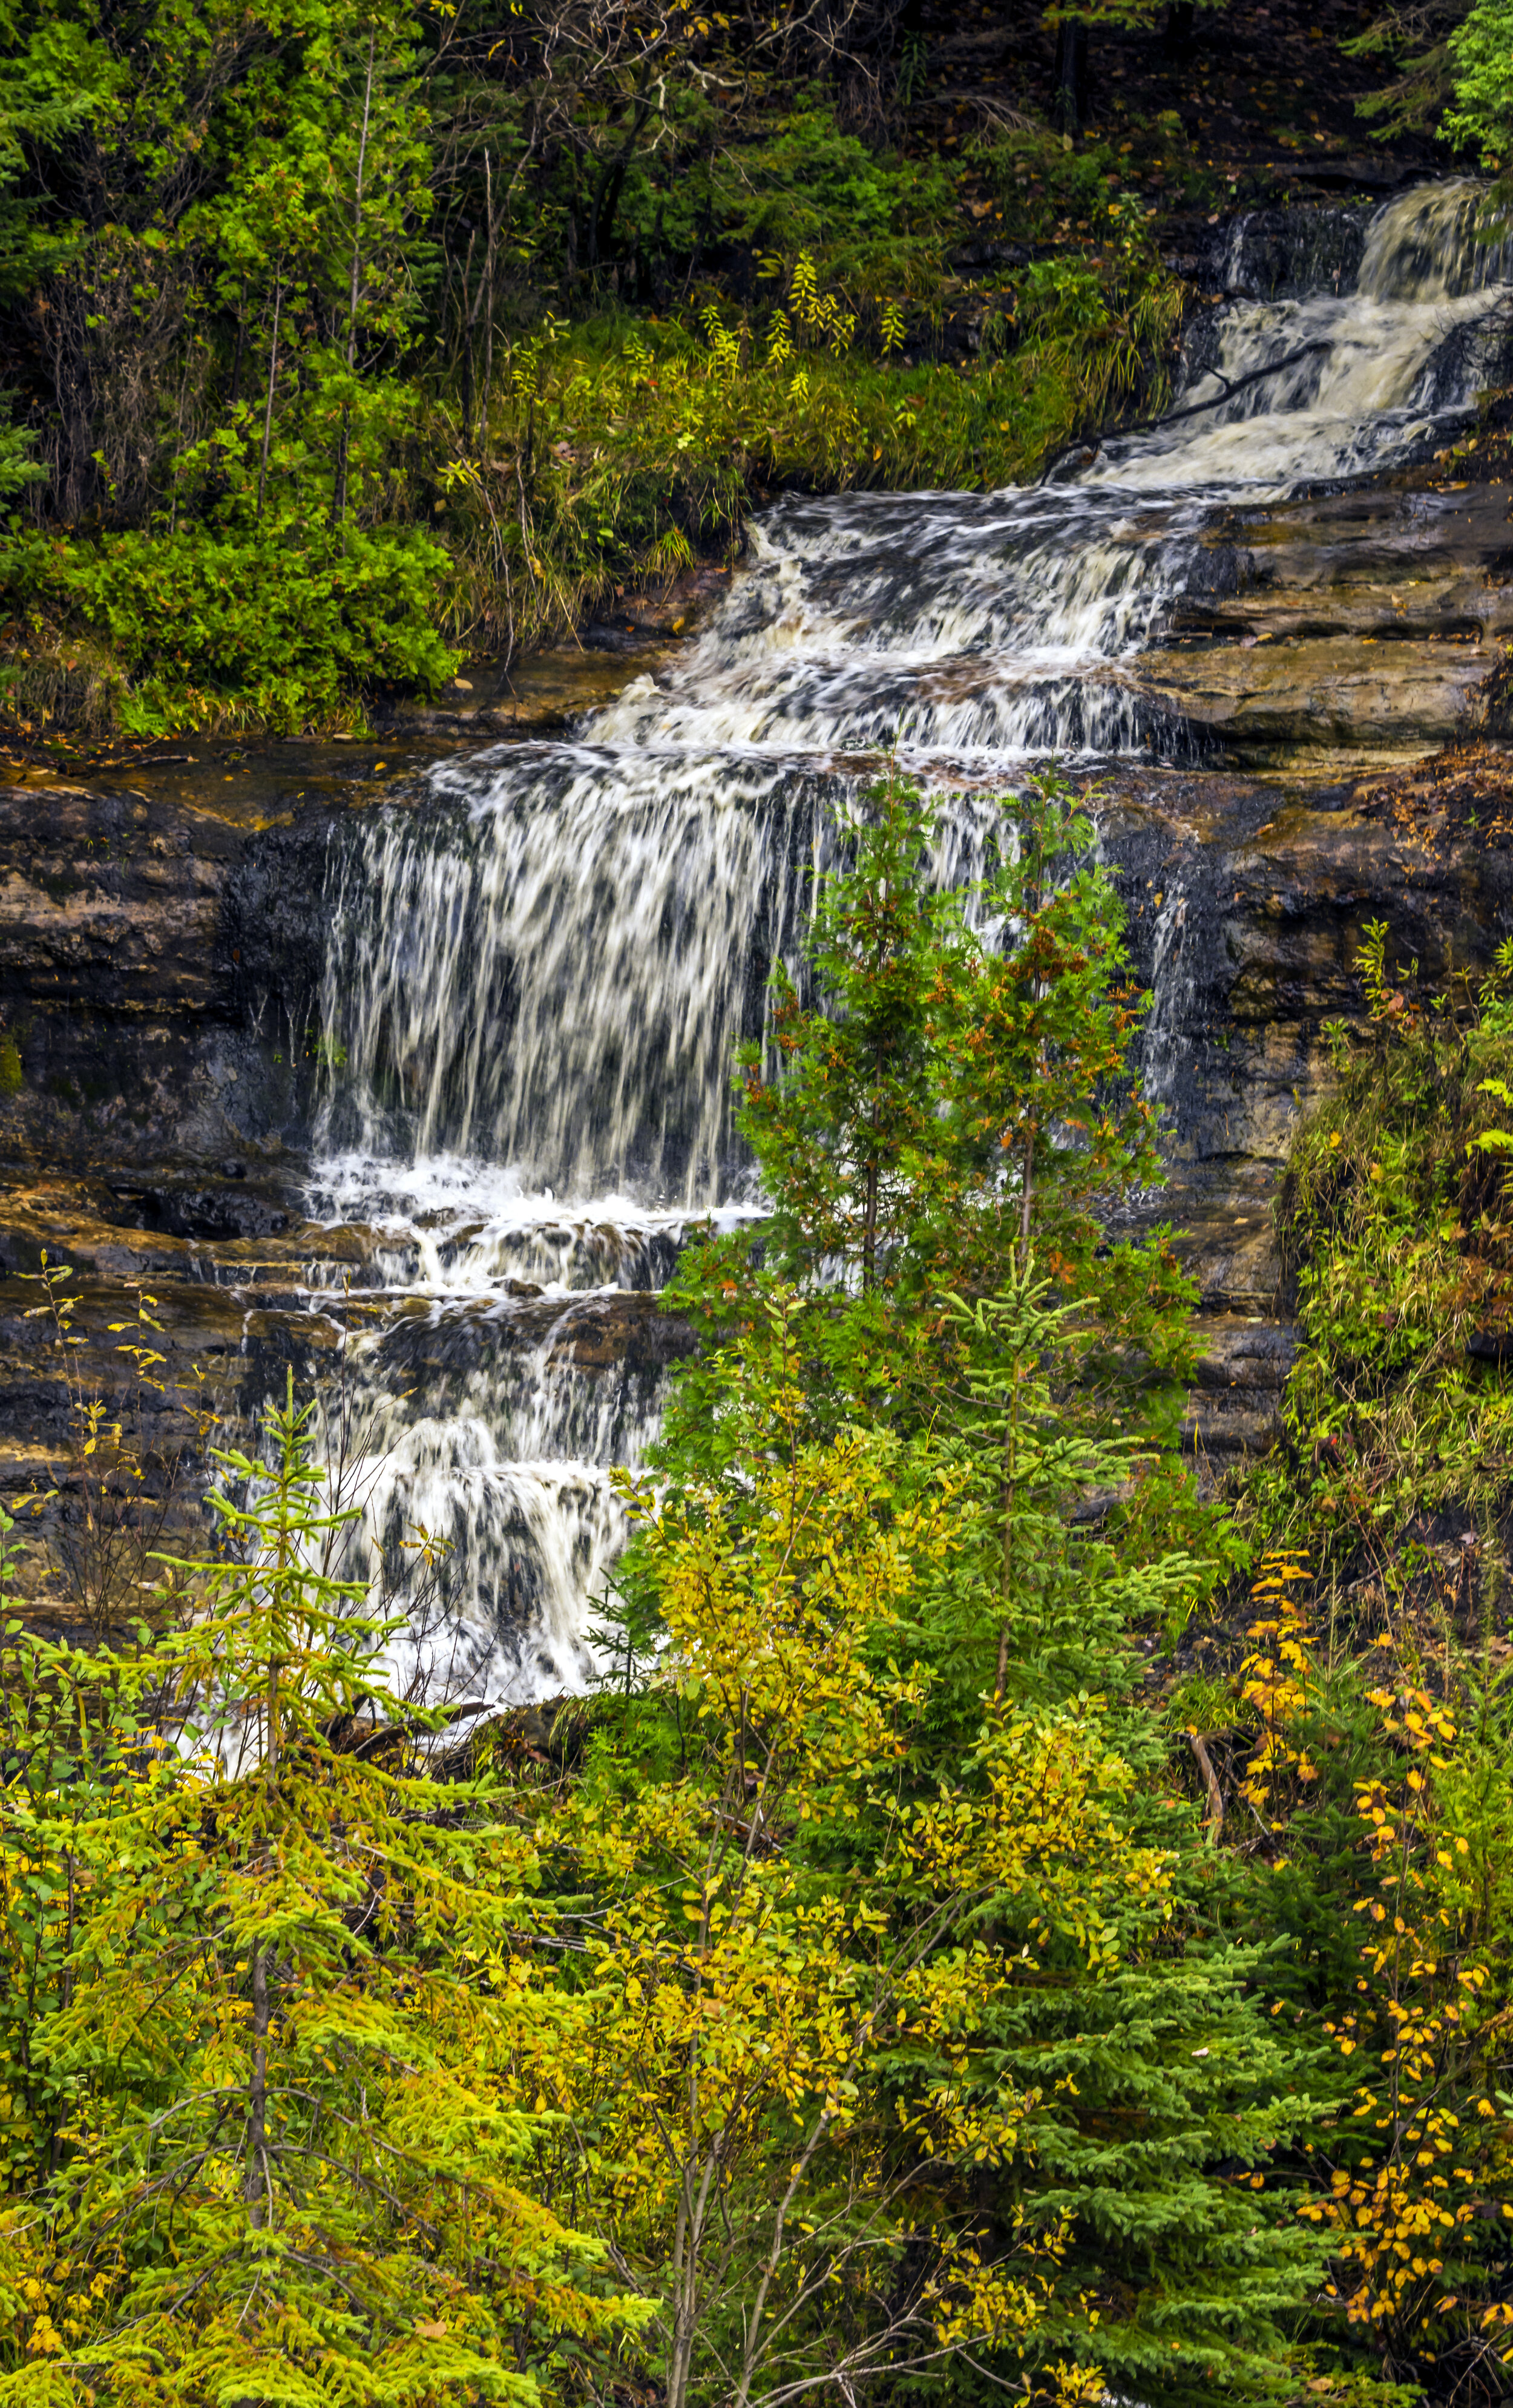  Alger Falls in Munising, Michigan 